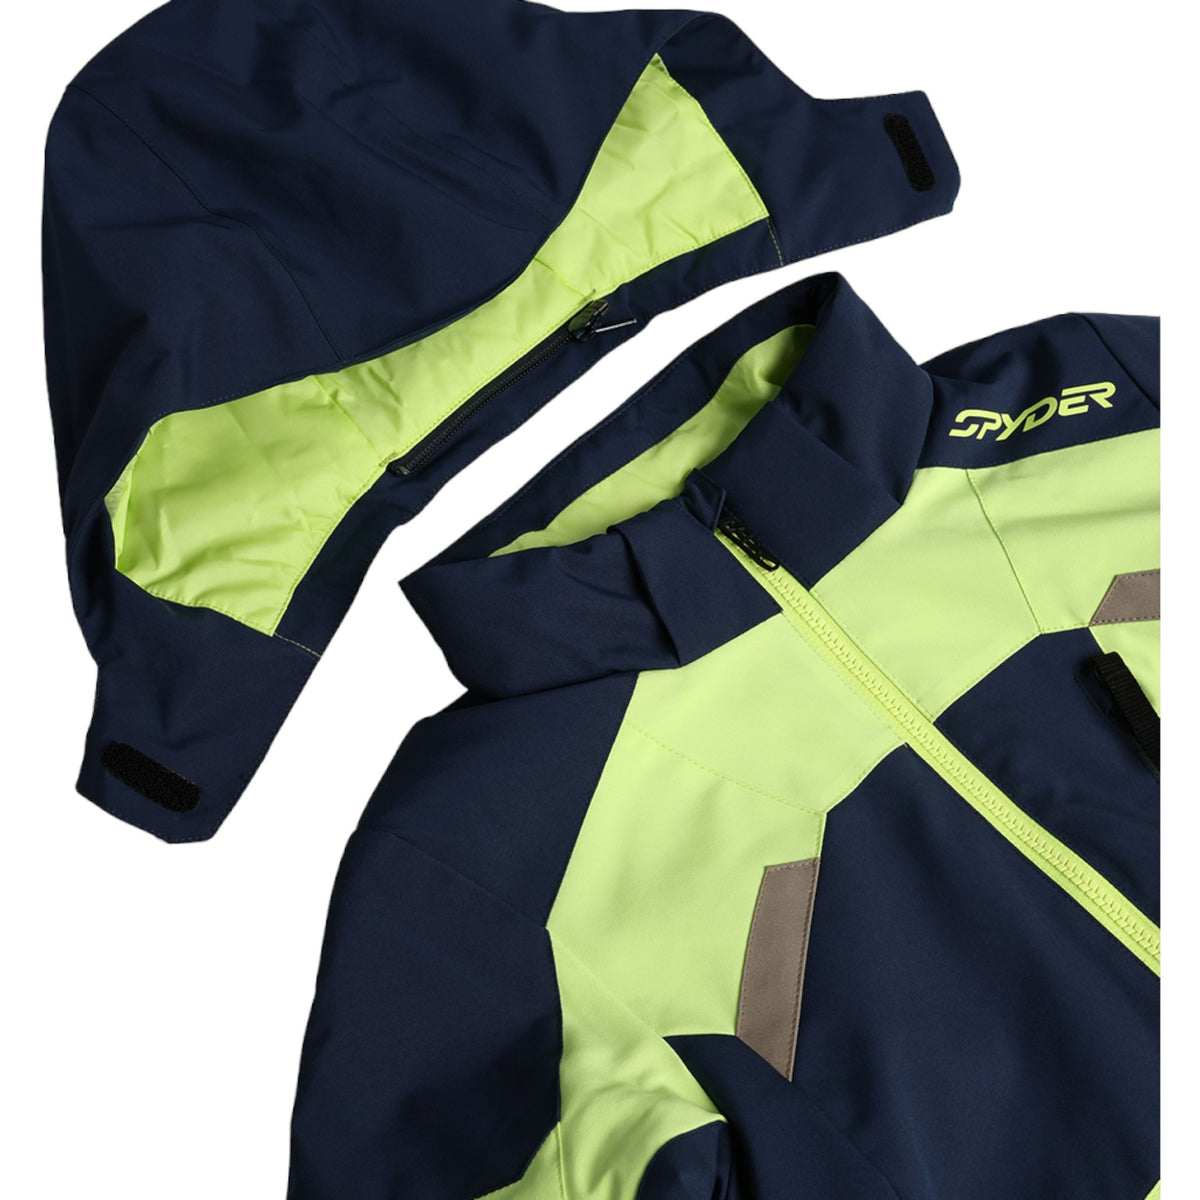 Spyder Leader Boy Jacket – Oberson